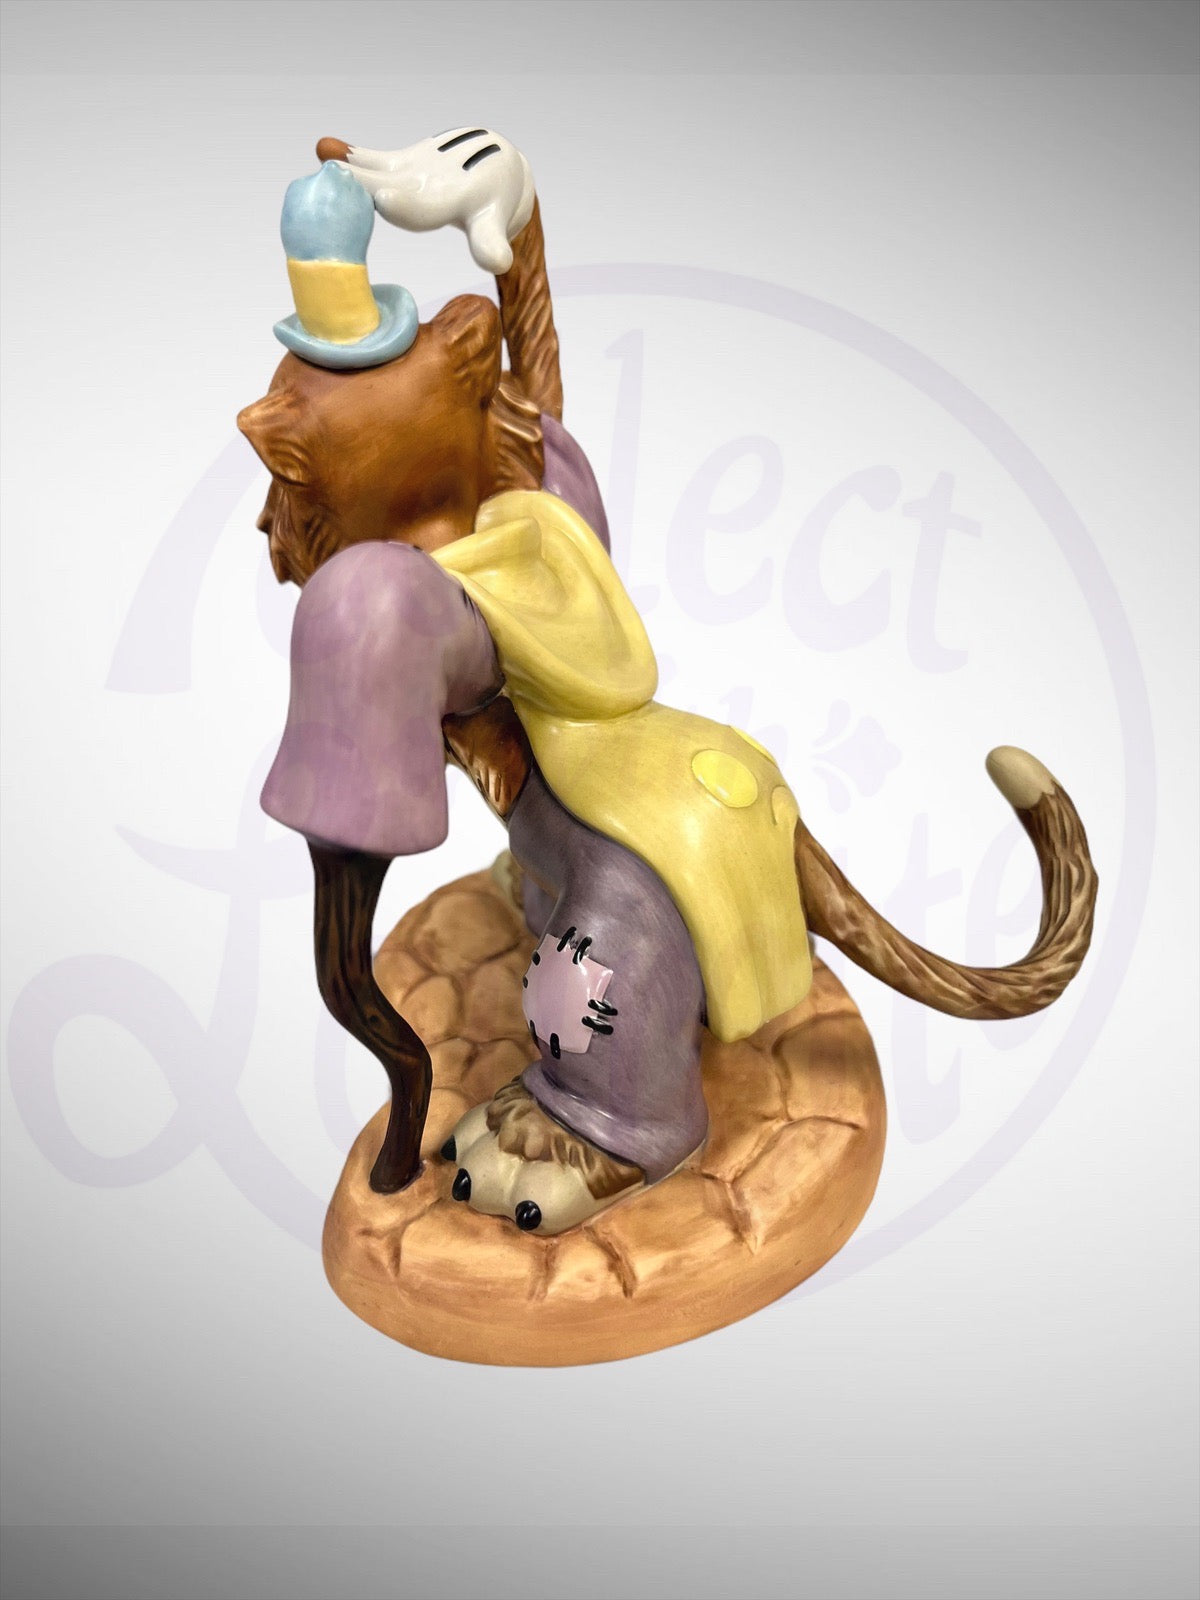 Walt Disney Classics Collection - WDCC Pinocchio Feline Flunky Gideon Figurine